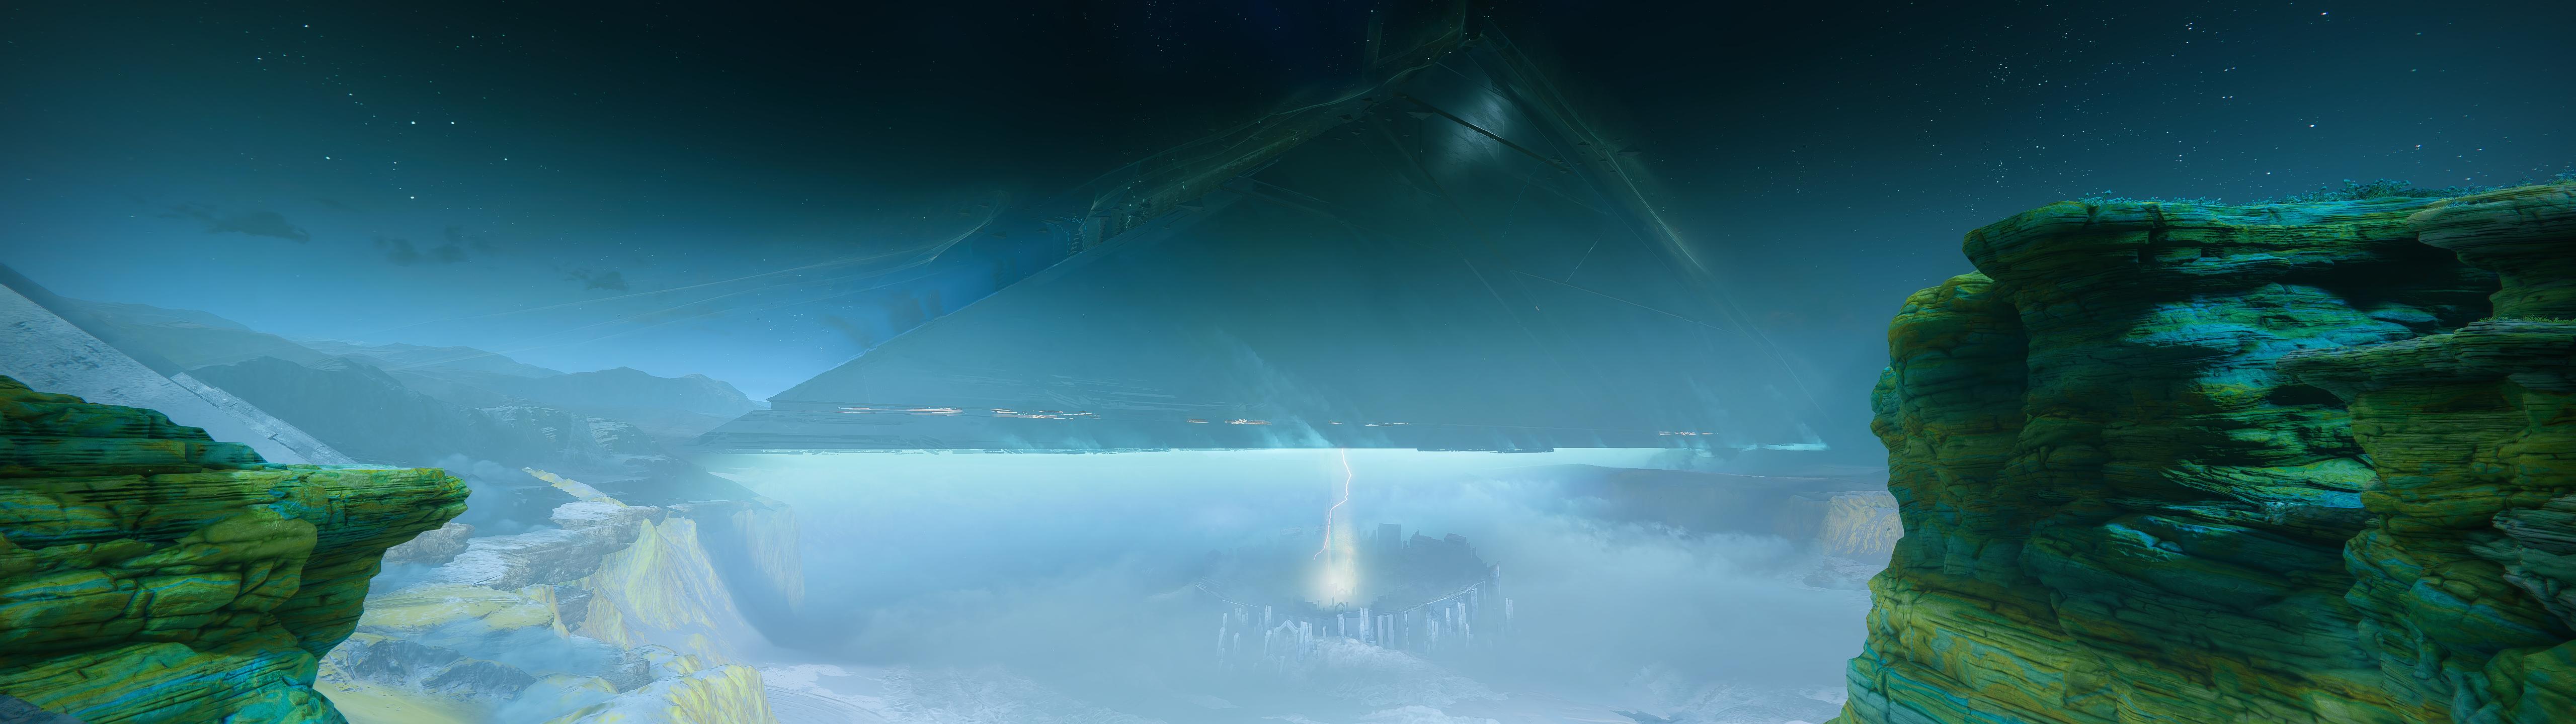 Destiny 2: Super ultrawide (5120x1440) background